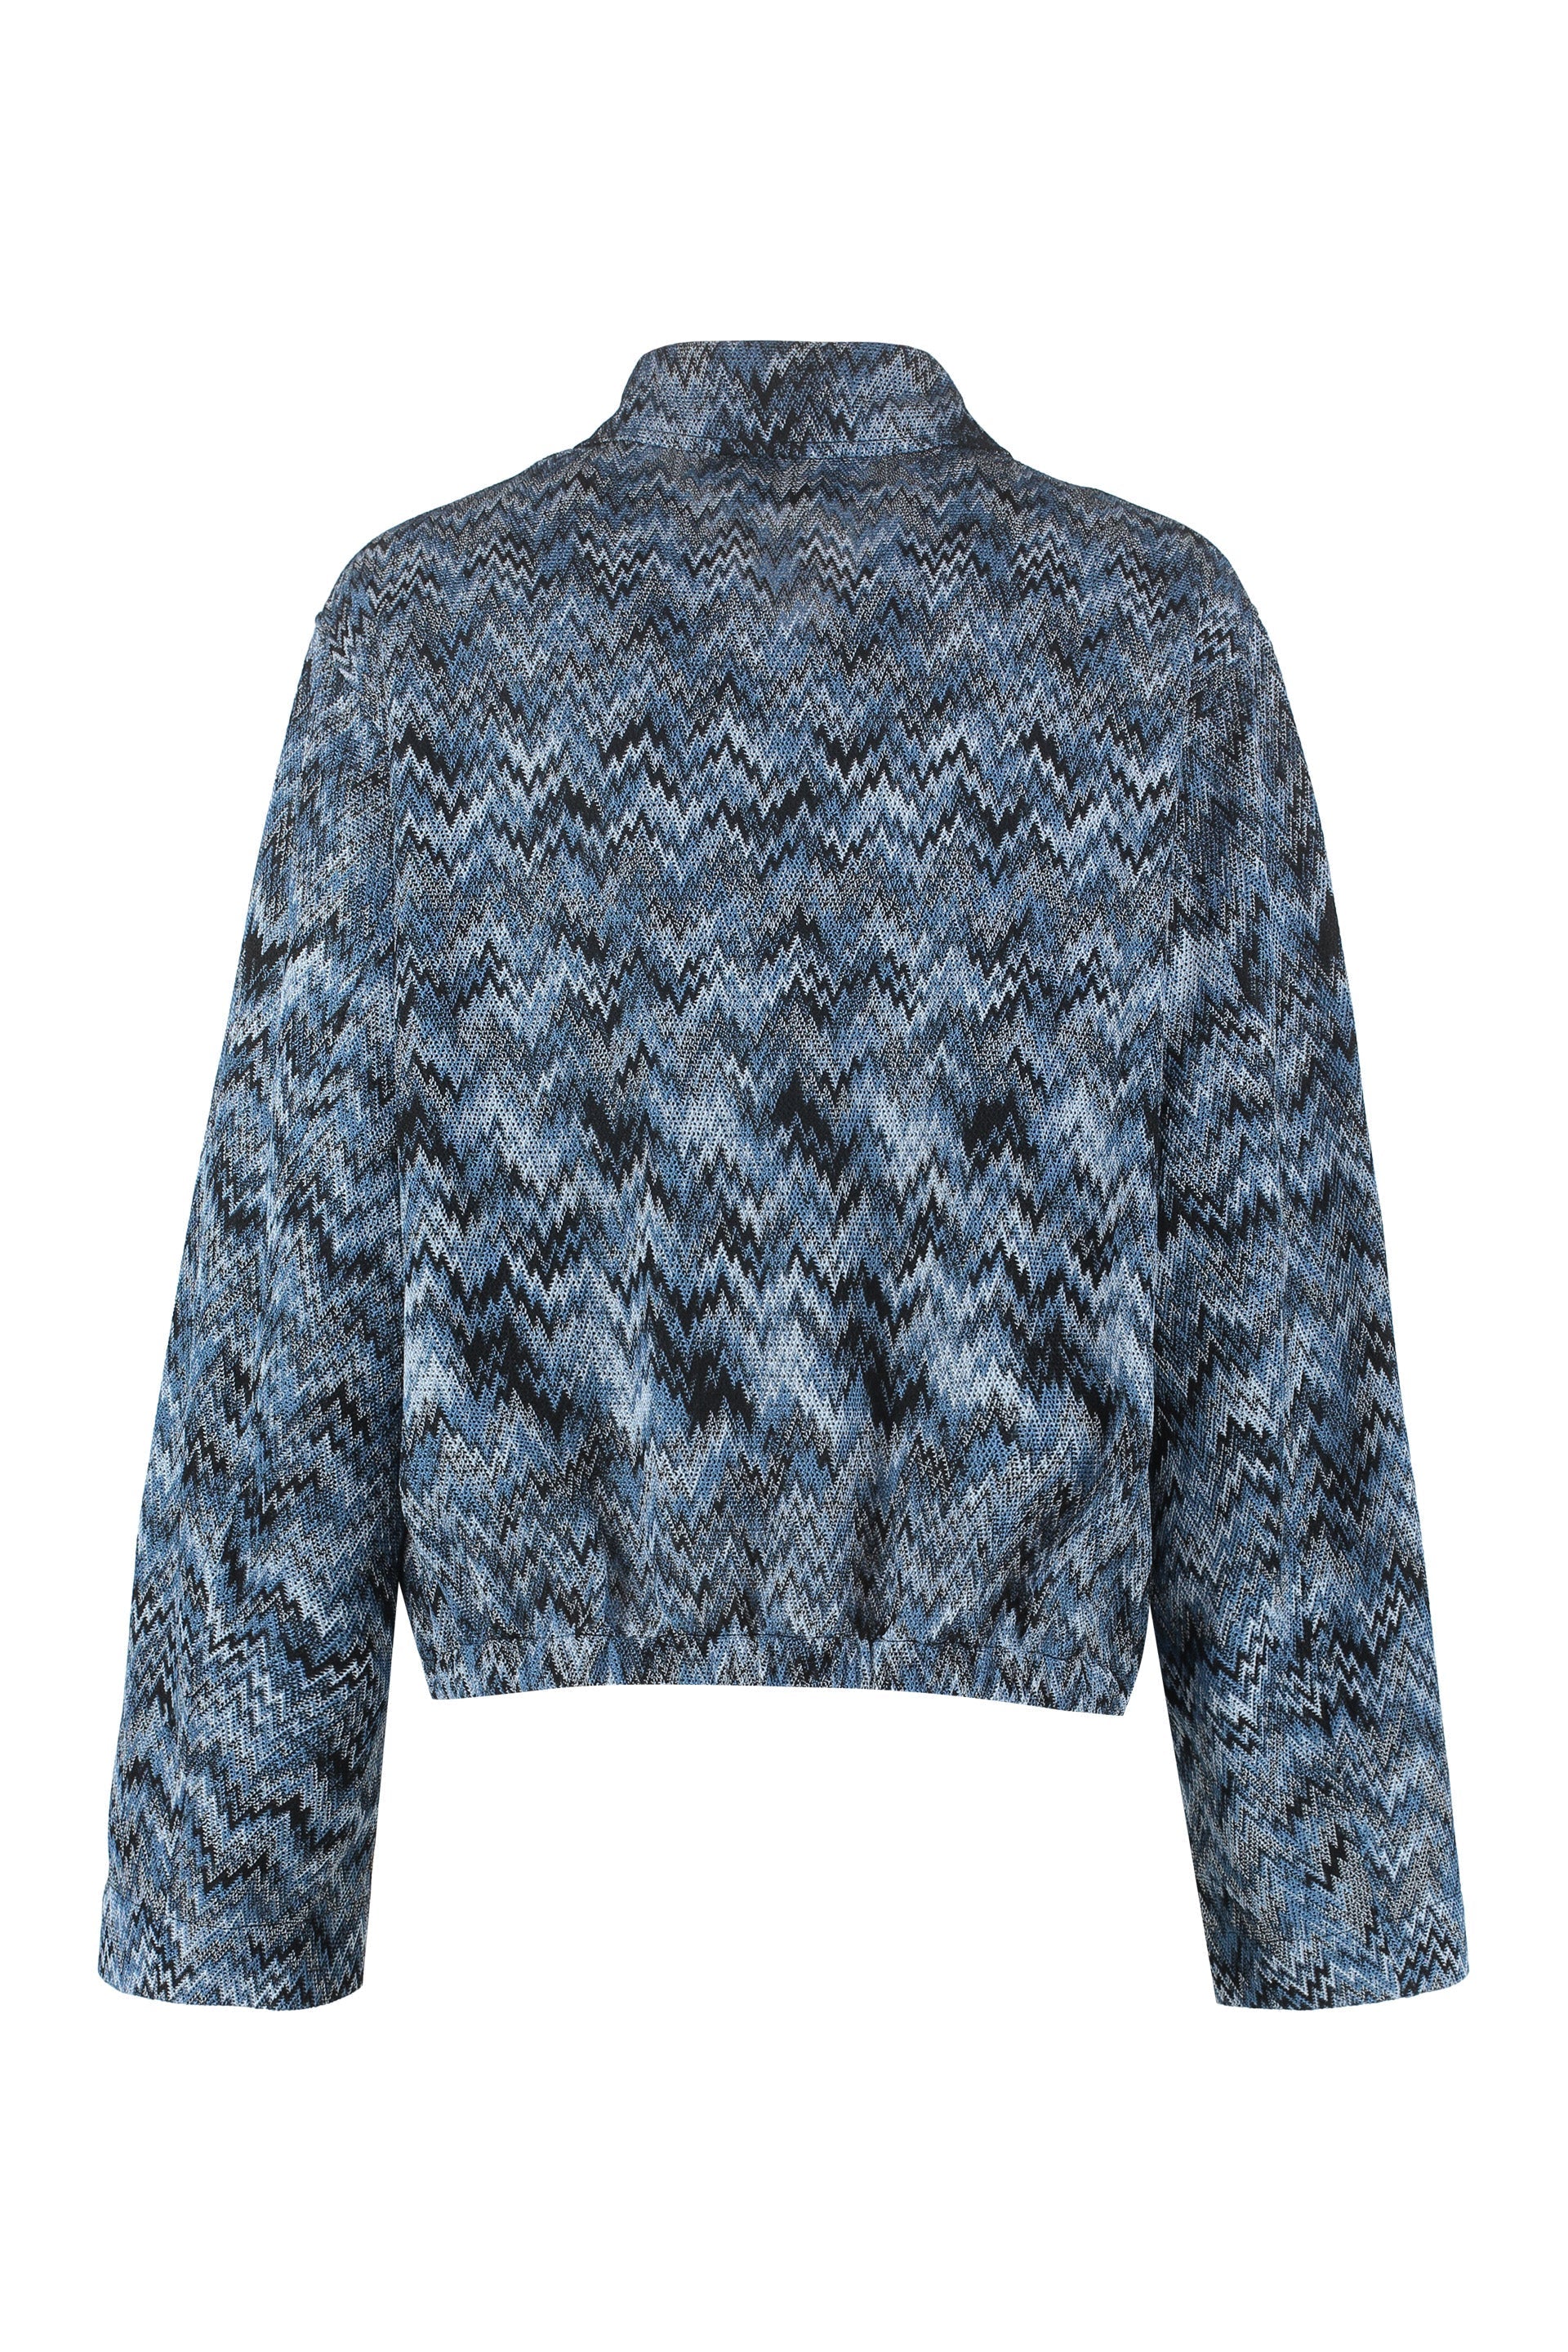 Chevron motif knitted jacket-Missoni-OUTLET-SALE-ARCHIVIST